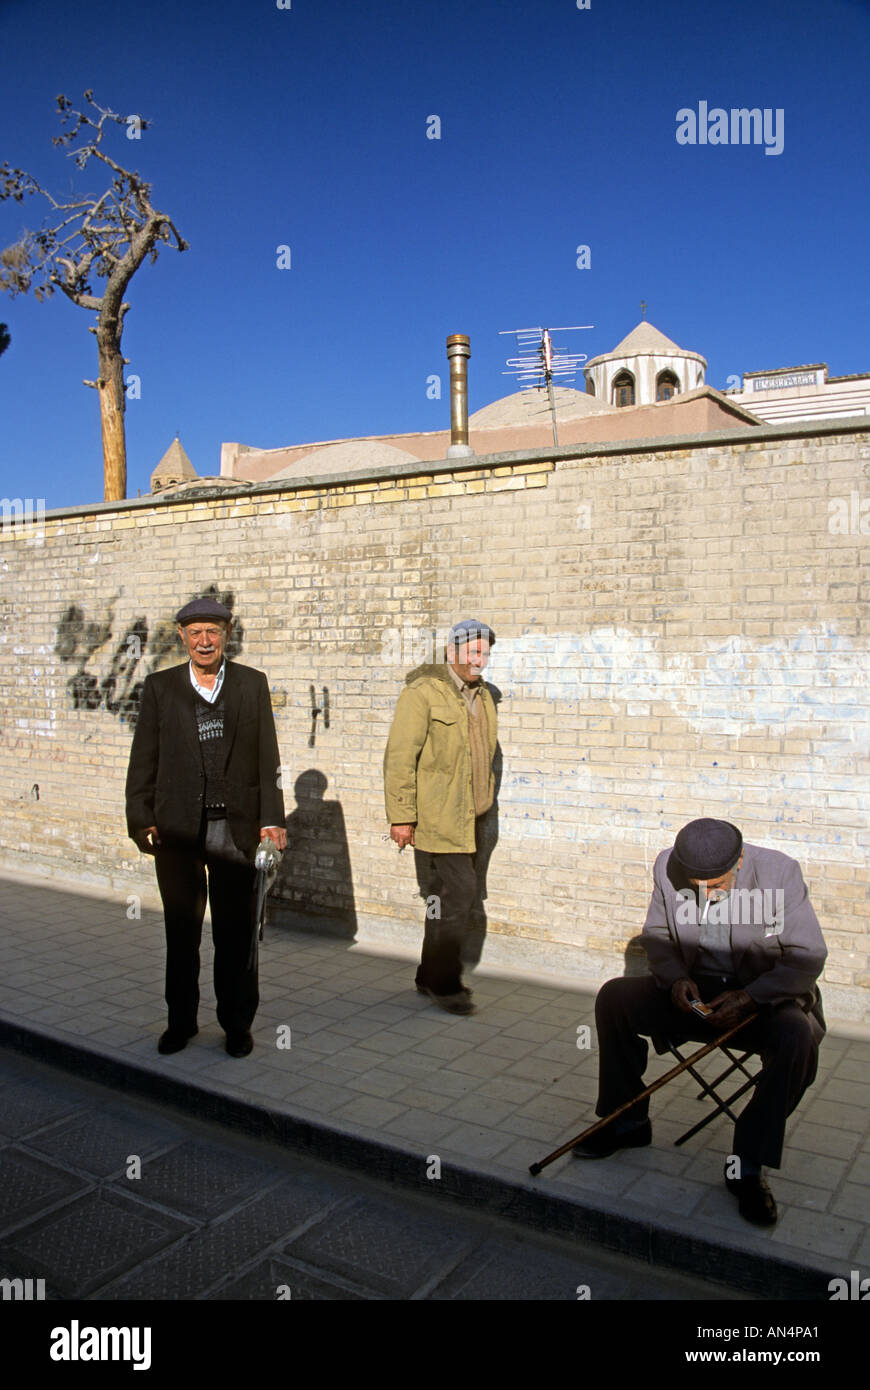 Uomini armeno sulla strada, Esfehan, Iran Foto Stock